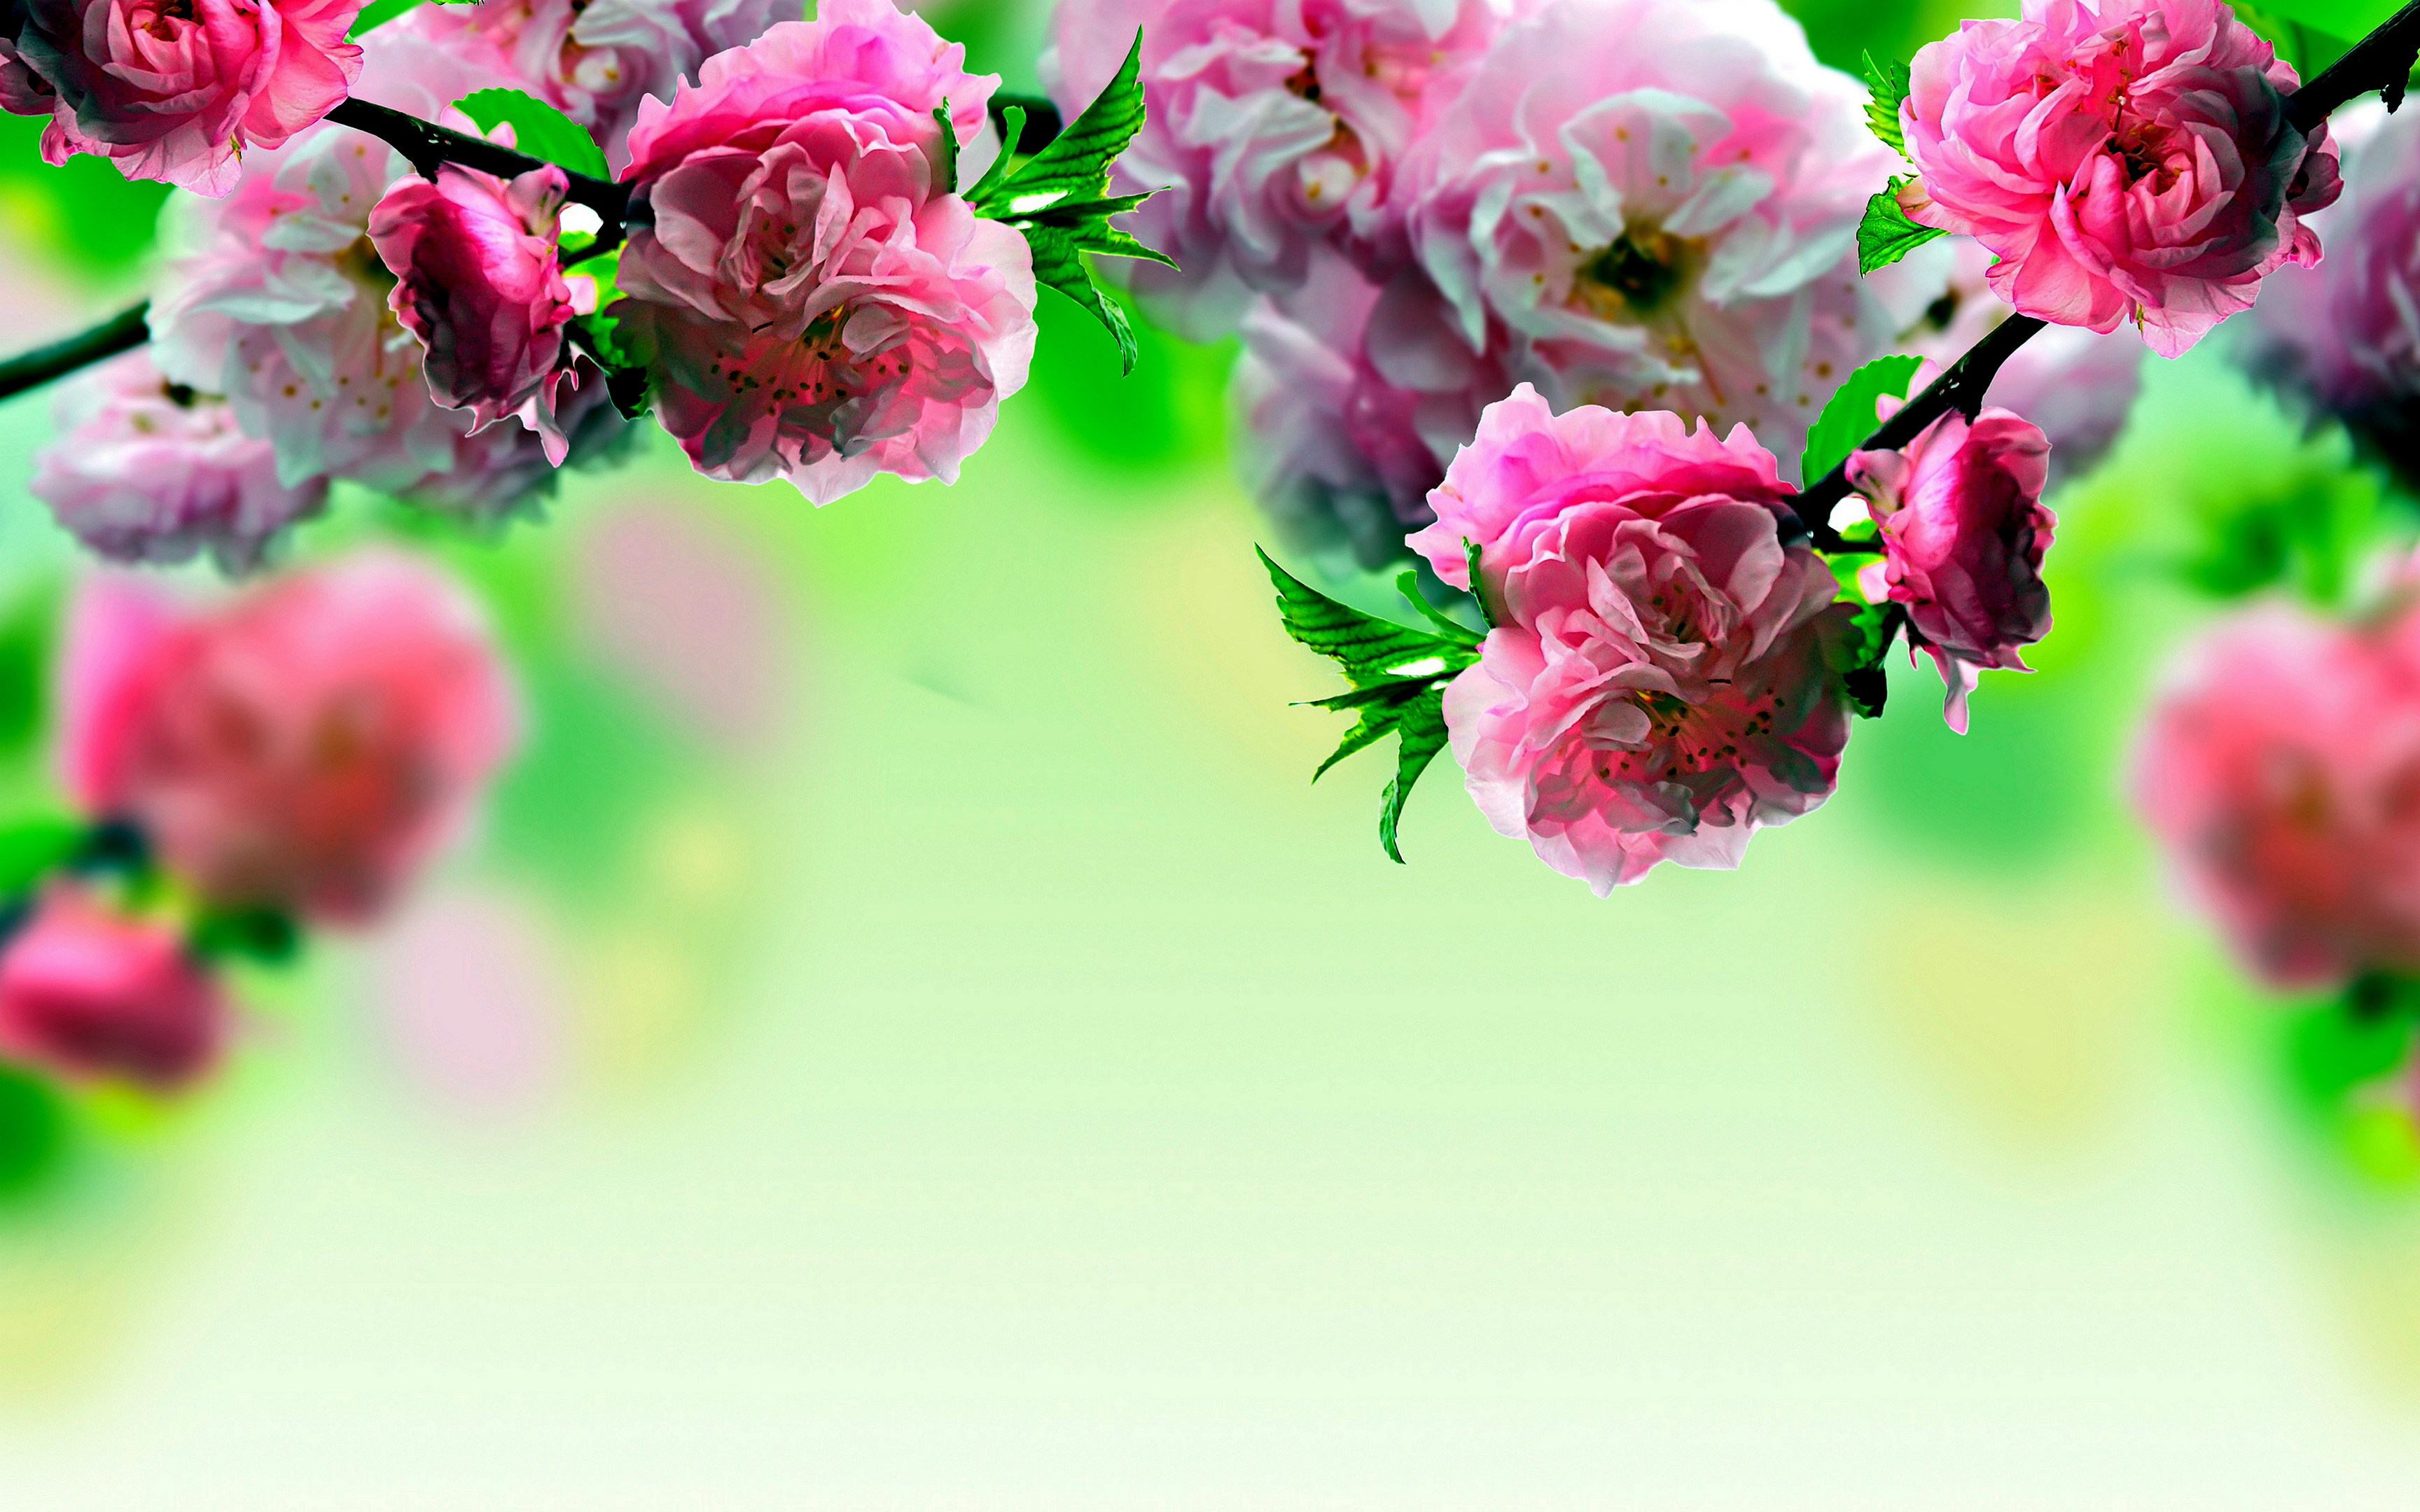 3456x2160 GL; Spring Flowers Wallpaper Desktop #h4464640, 6.42 Mb ...